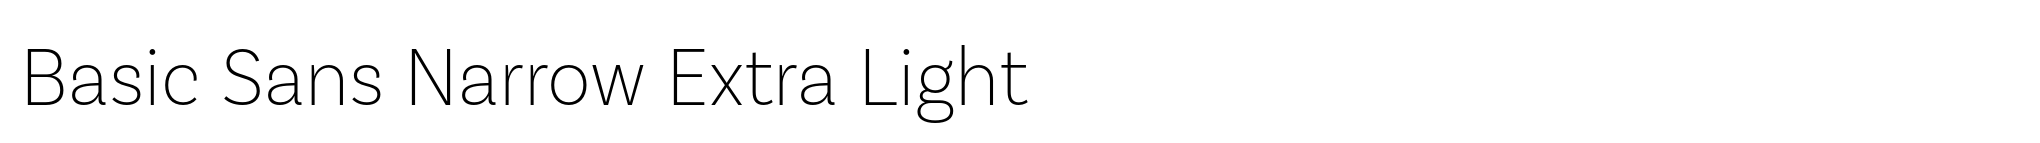 Basic Sans Narrow Extra Light image